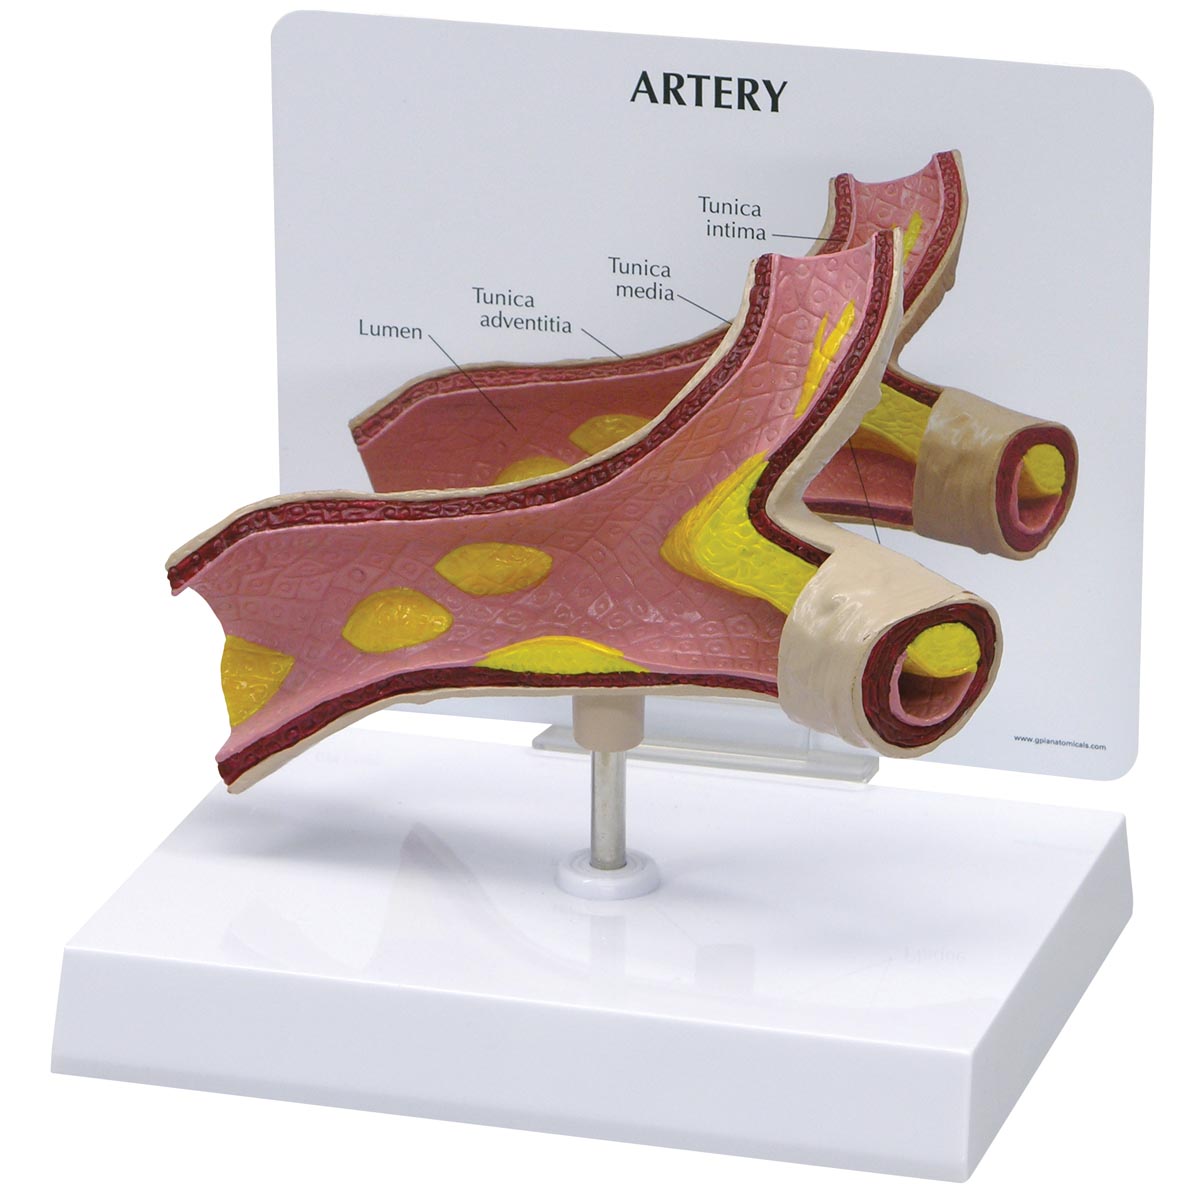 Arterienmodell, Bestellnummer 1019531, G60, 2600, GPI Anatomicals